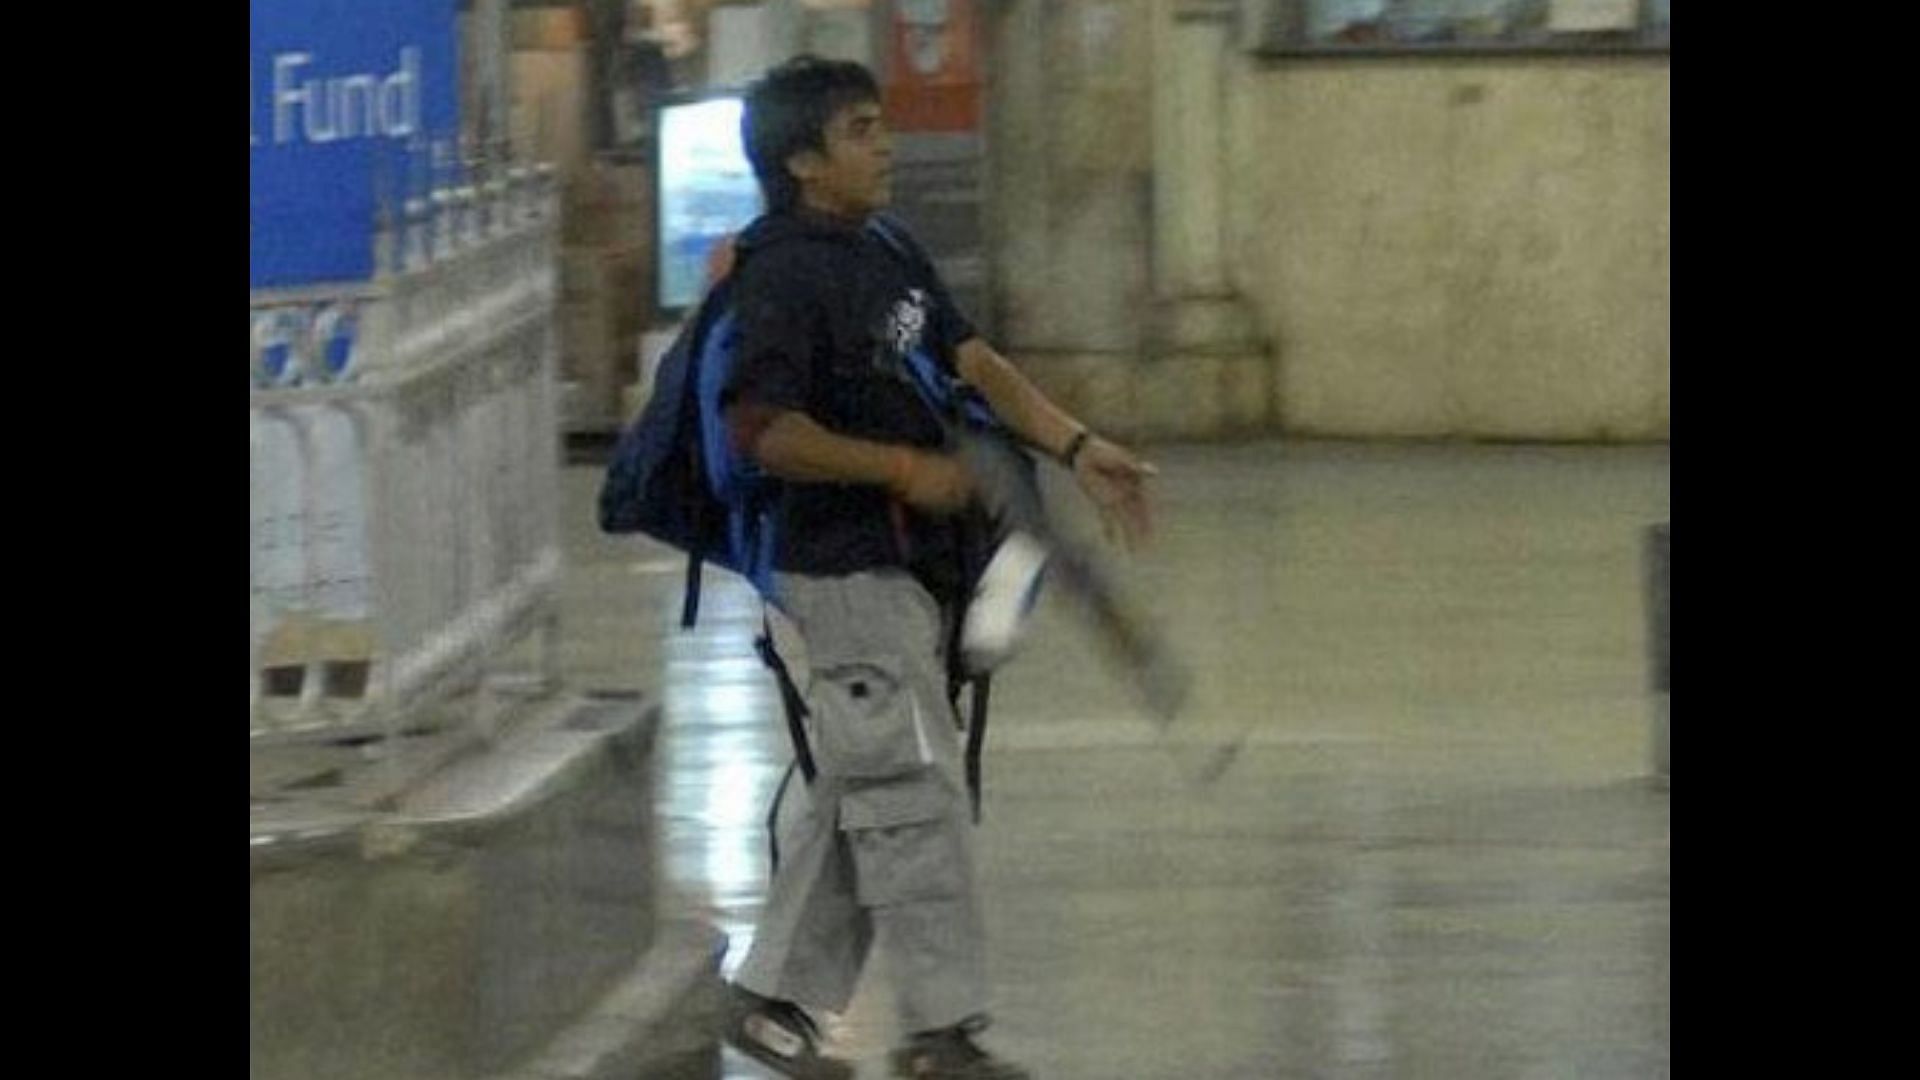 File image of Ajmal Kasab during the 26/11 Mumbai terrorist attack.